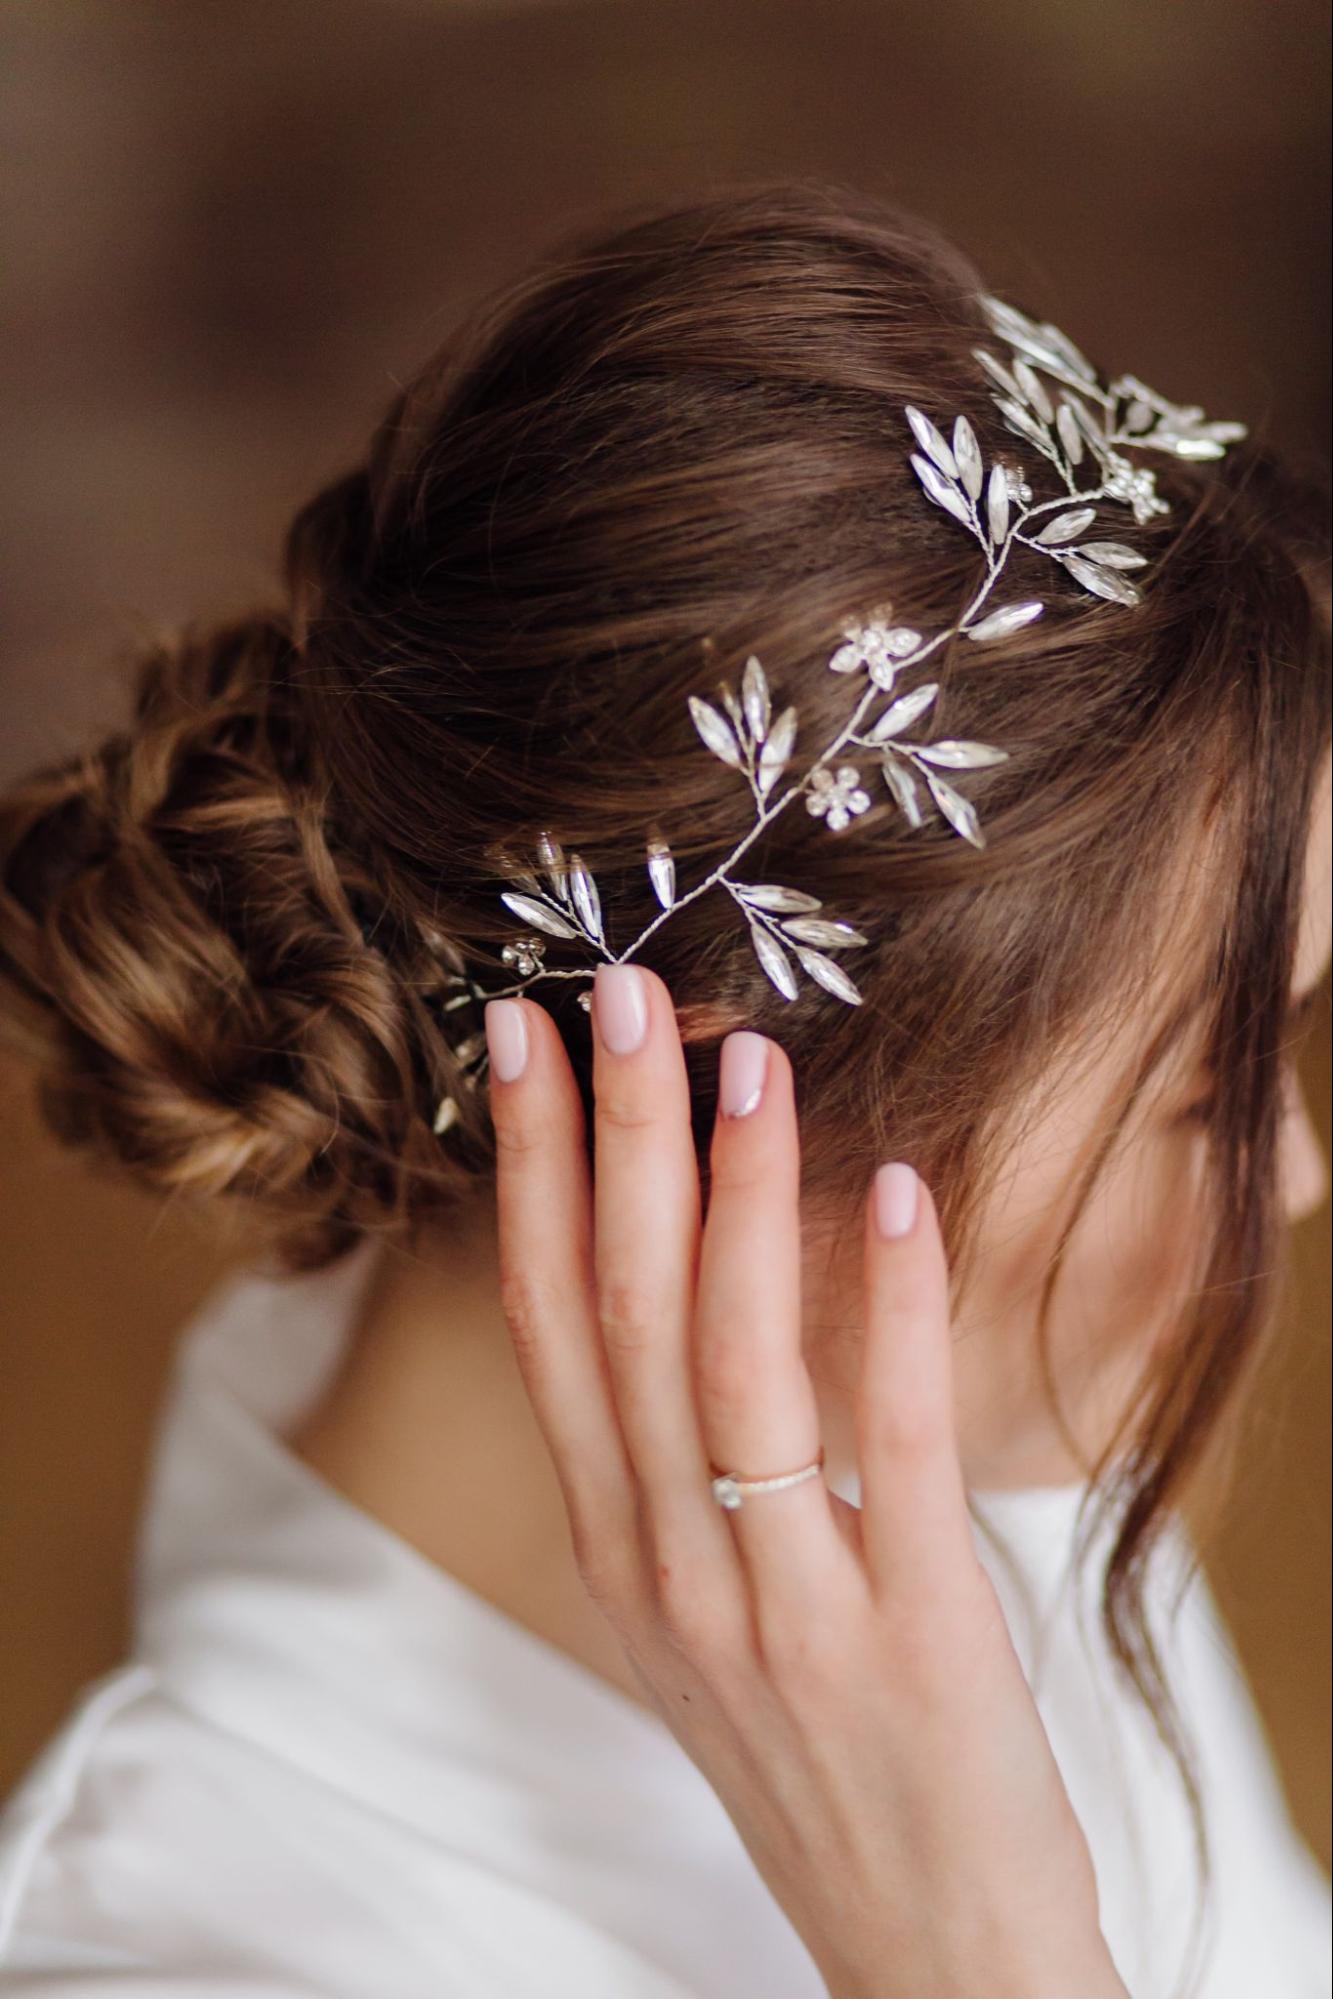 Choosing Wedding Hair Accessories: Stylist Tips